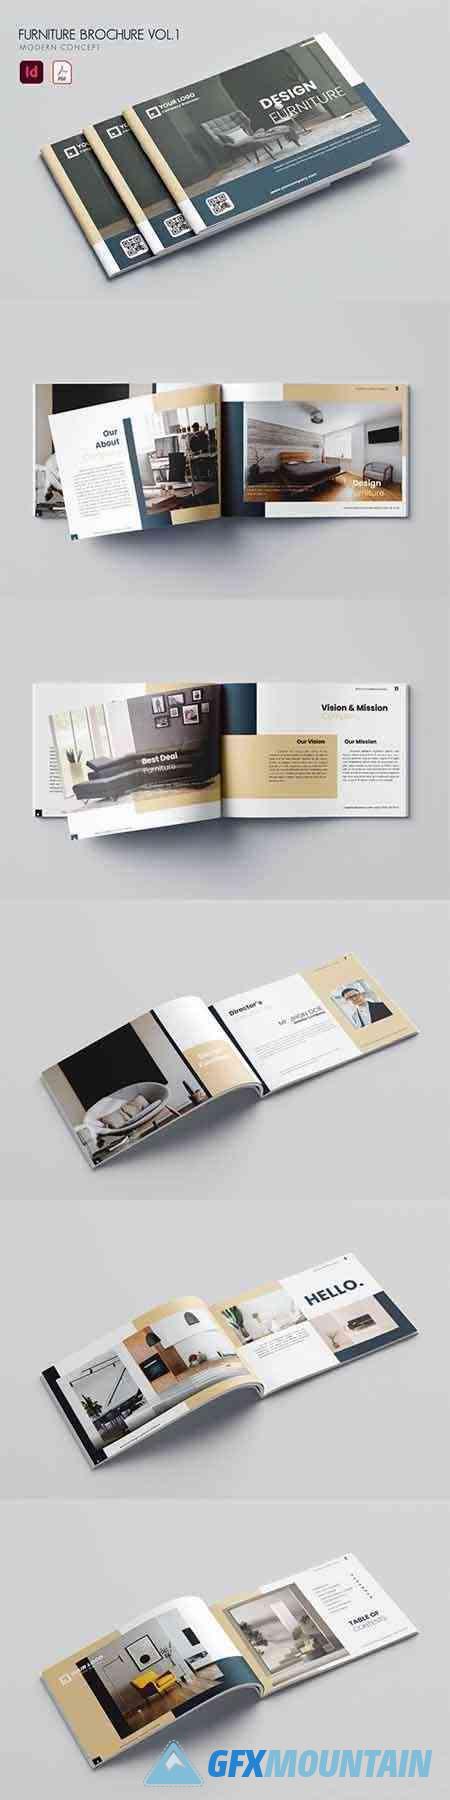 Furniture Brochure Vol.1